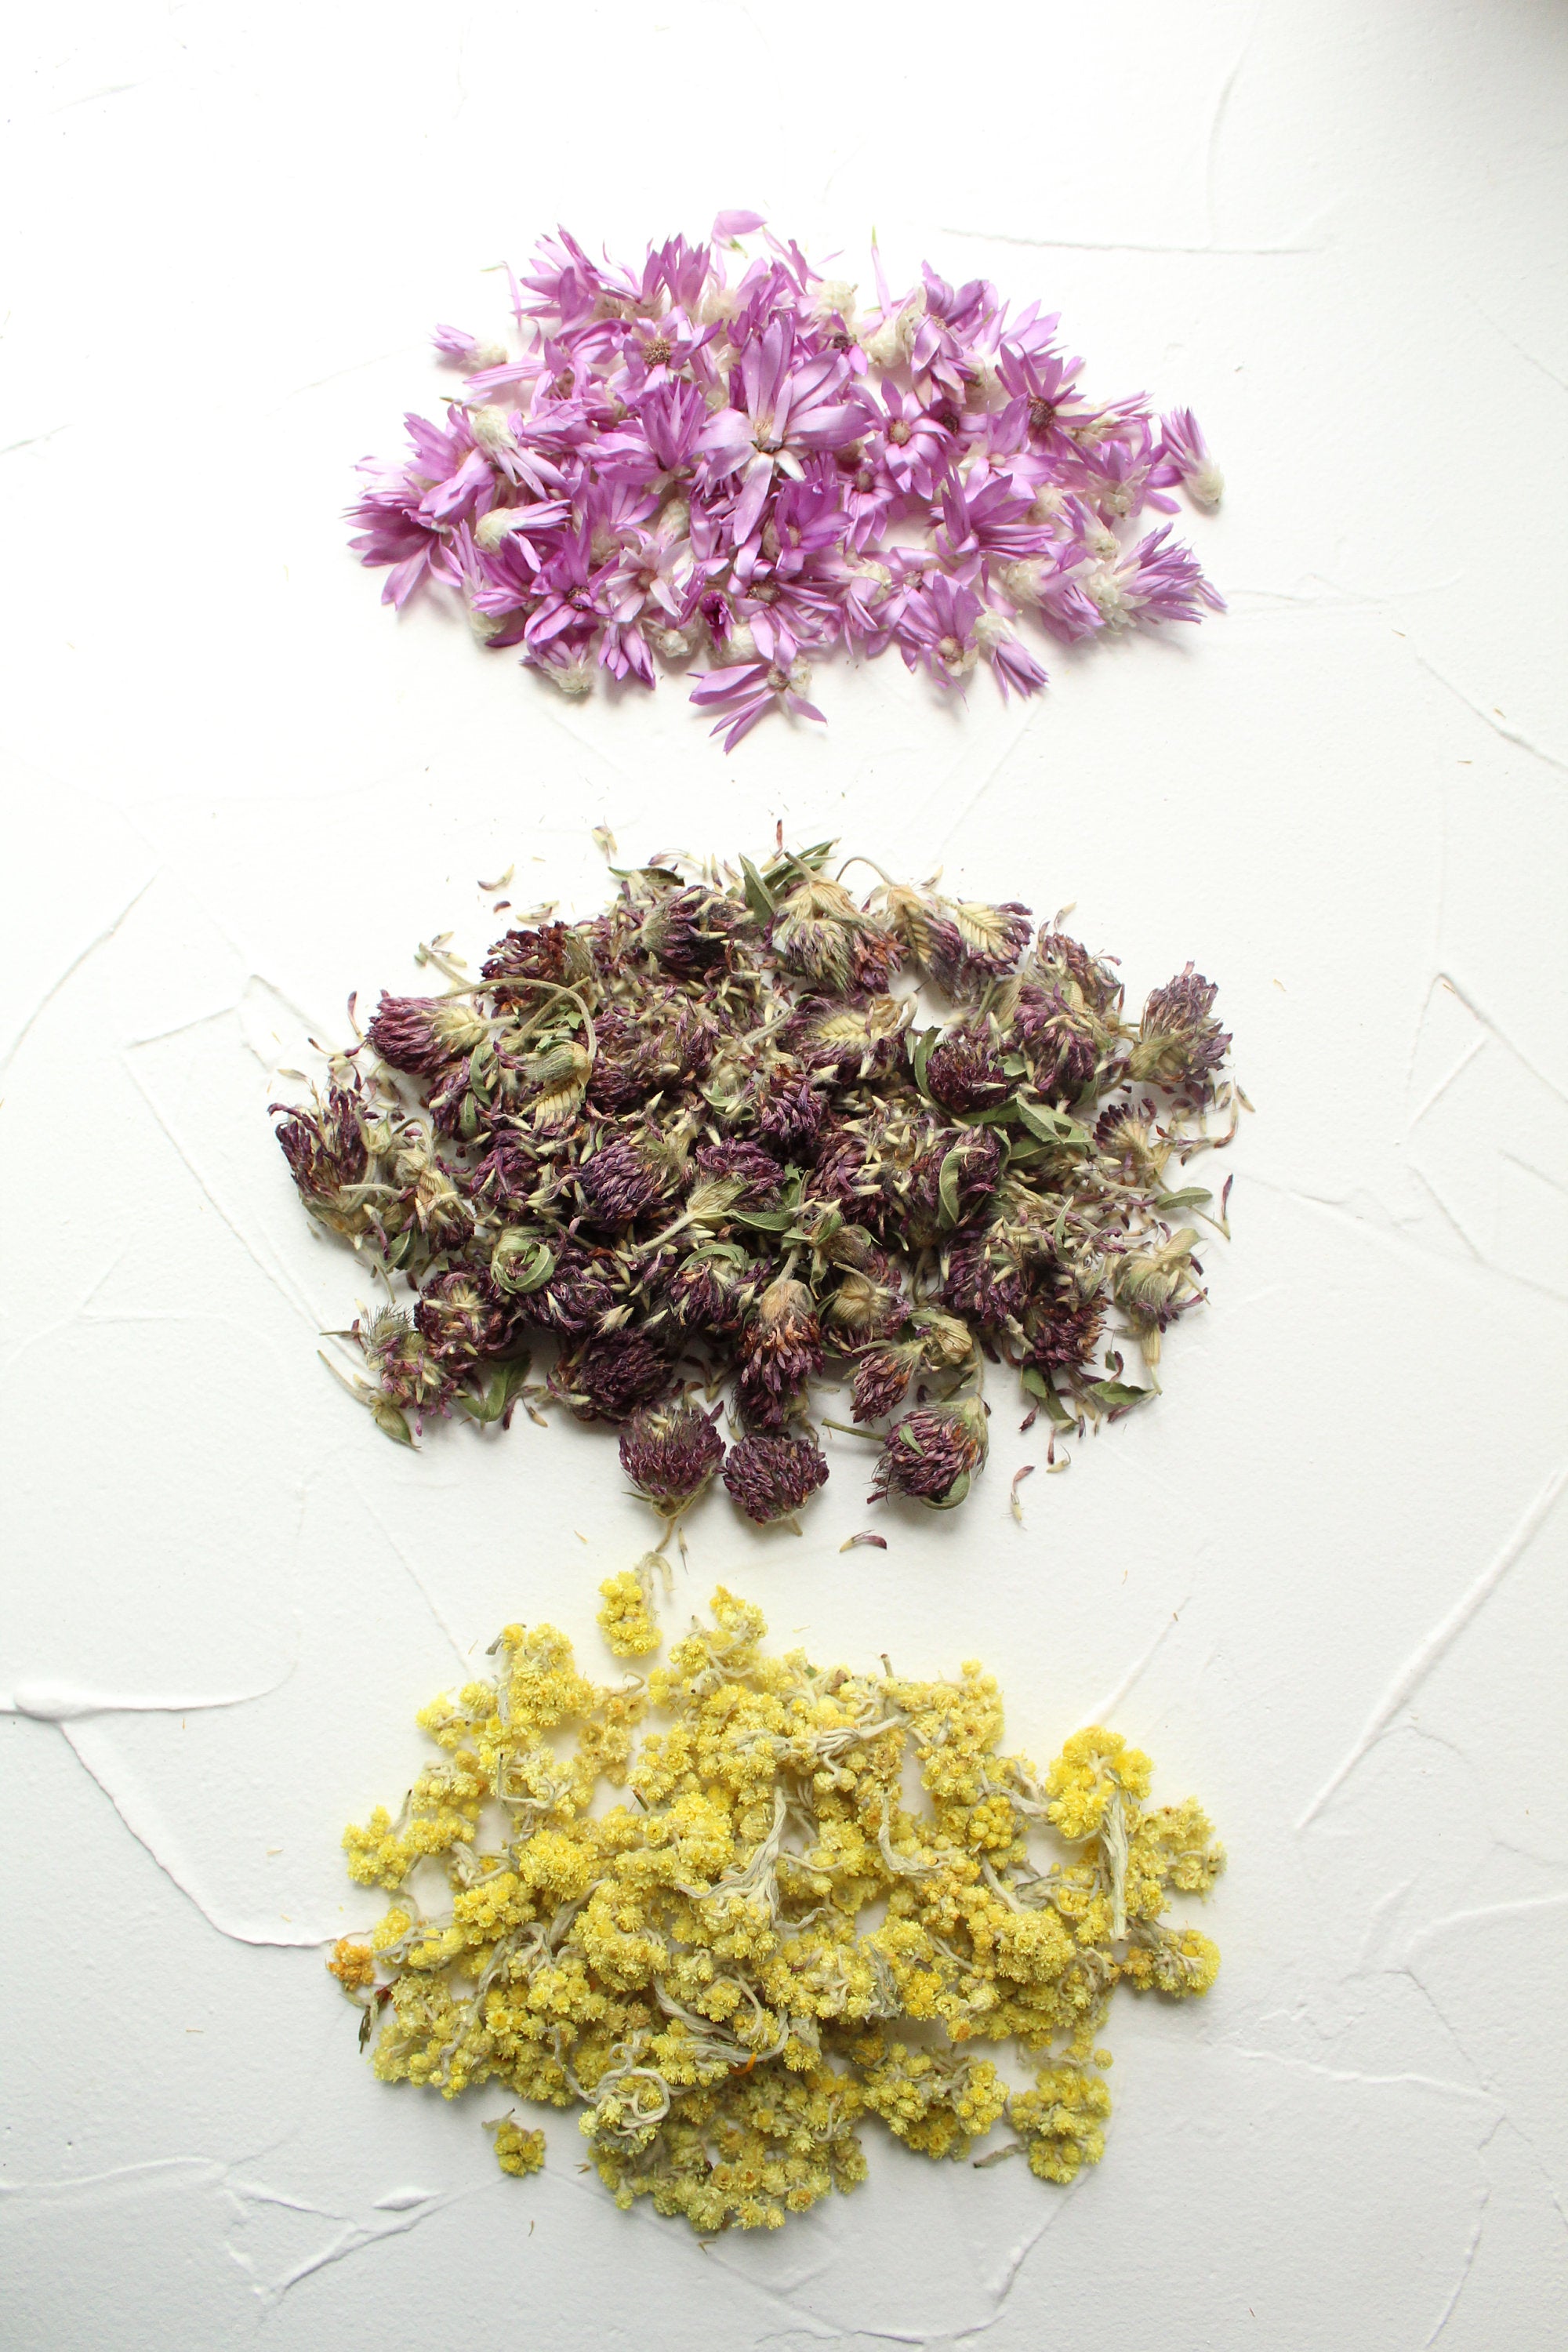 250 grams of Helichrysum flowers, Helichrysum, High Quality, Natural, Wild grow, Organic, Biodegraddable, Wedding, Craft, Edible, Confetti